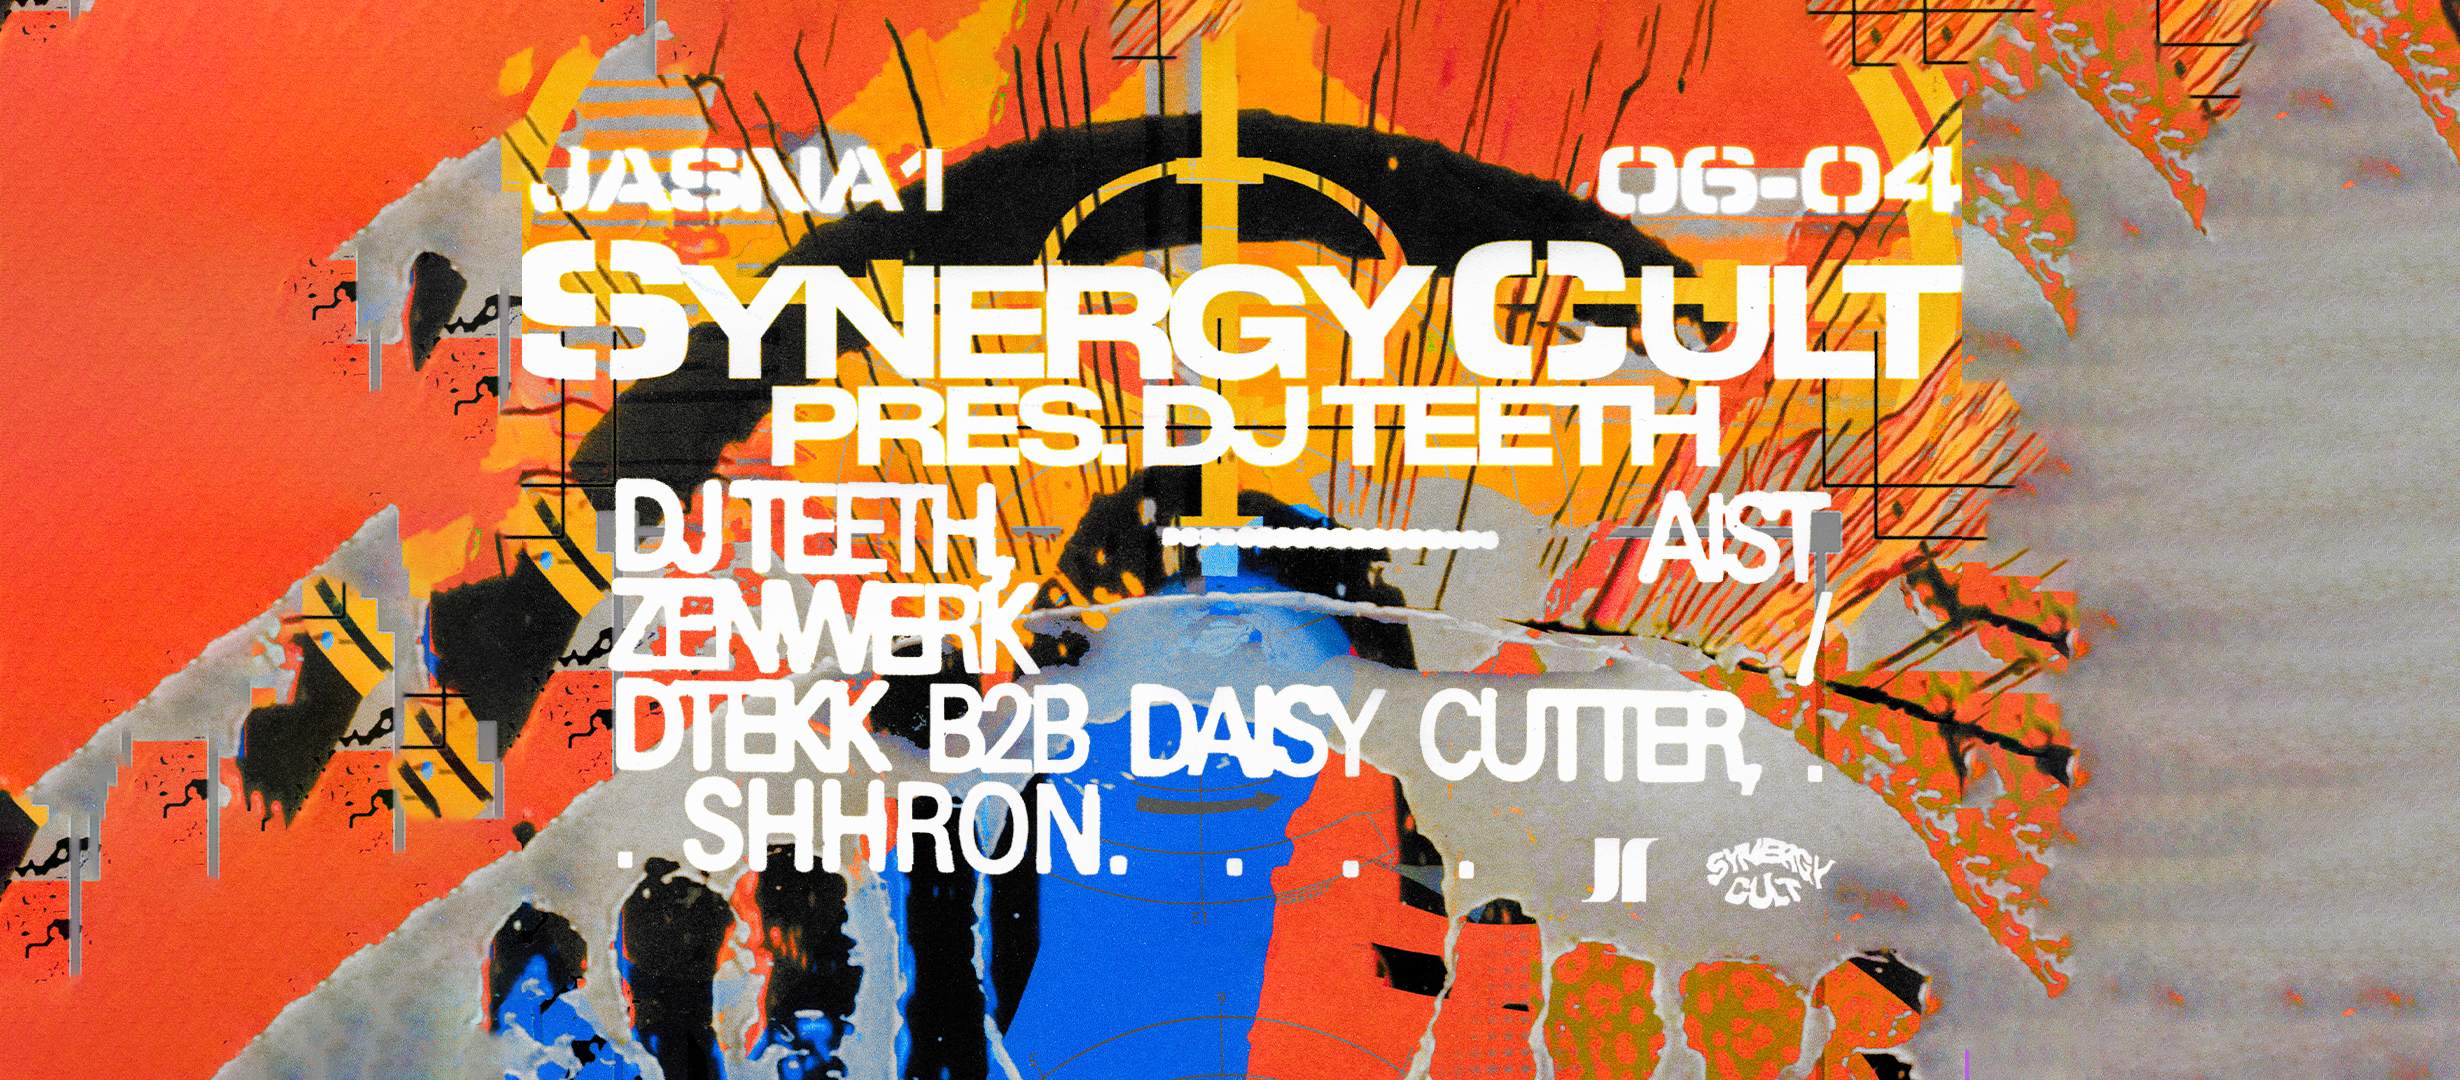 J1 - Synergy Cult with DJ TEETH, Aist, zenwerk / dtekk b2b daisy cutter, shhron - フライヤー表